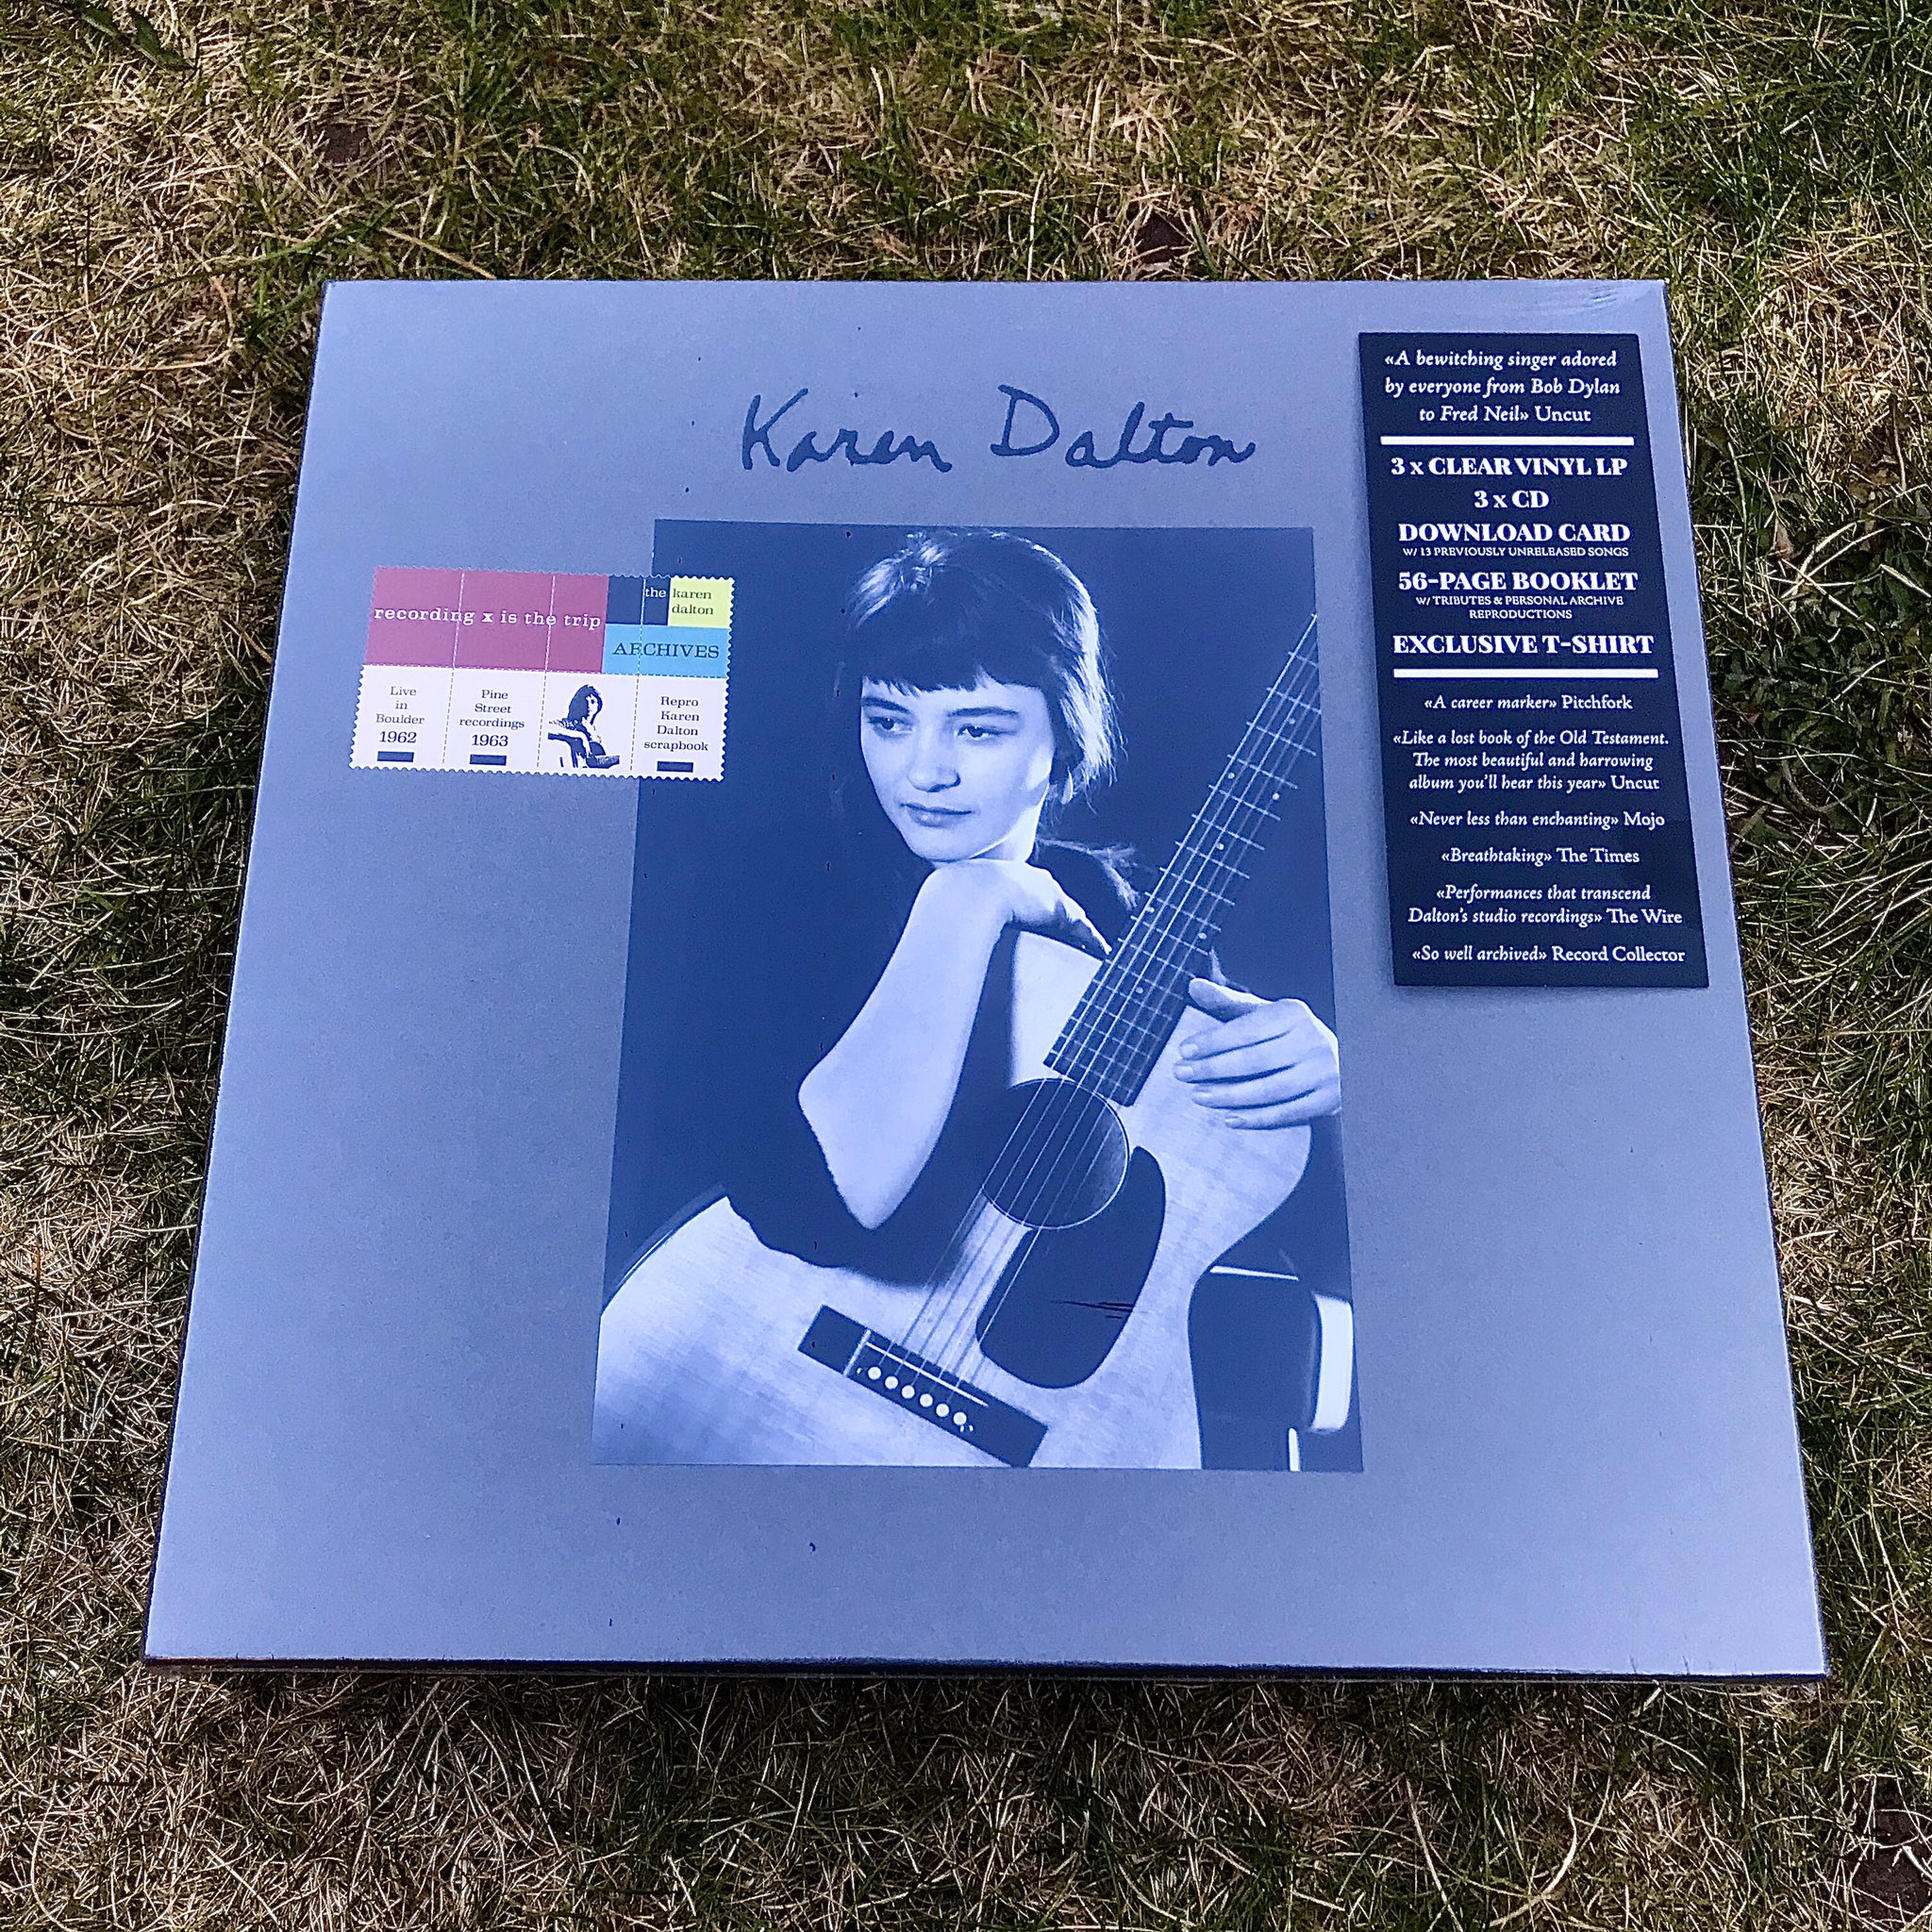 Bear Tree Records on X: "Just in! Gorgeous Karen Dalton box set